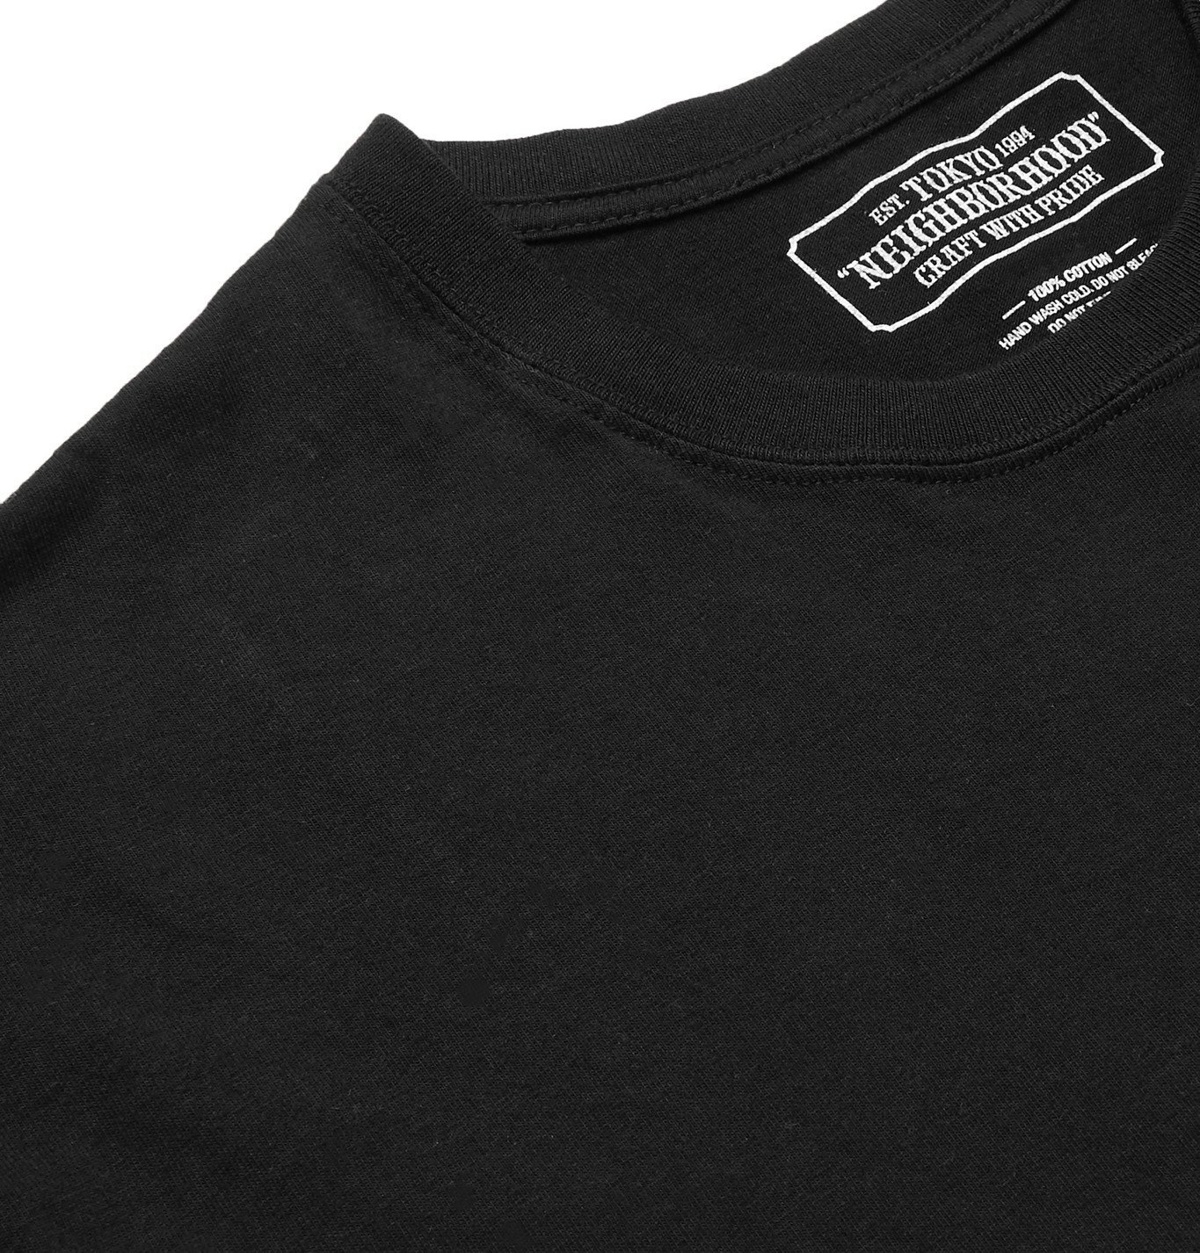 Neighborhood - Mr Cartoon Printed Cotton-Jersey T-Shirt - Black Neighborhood